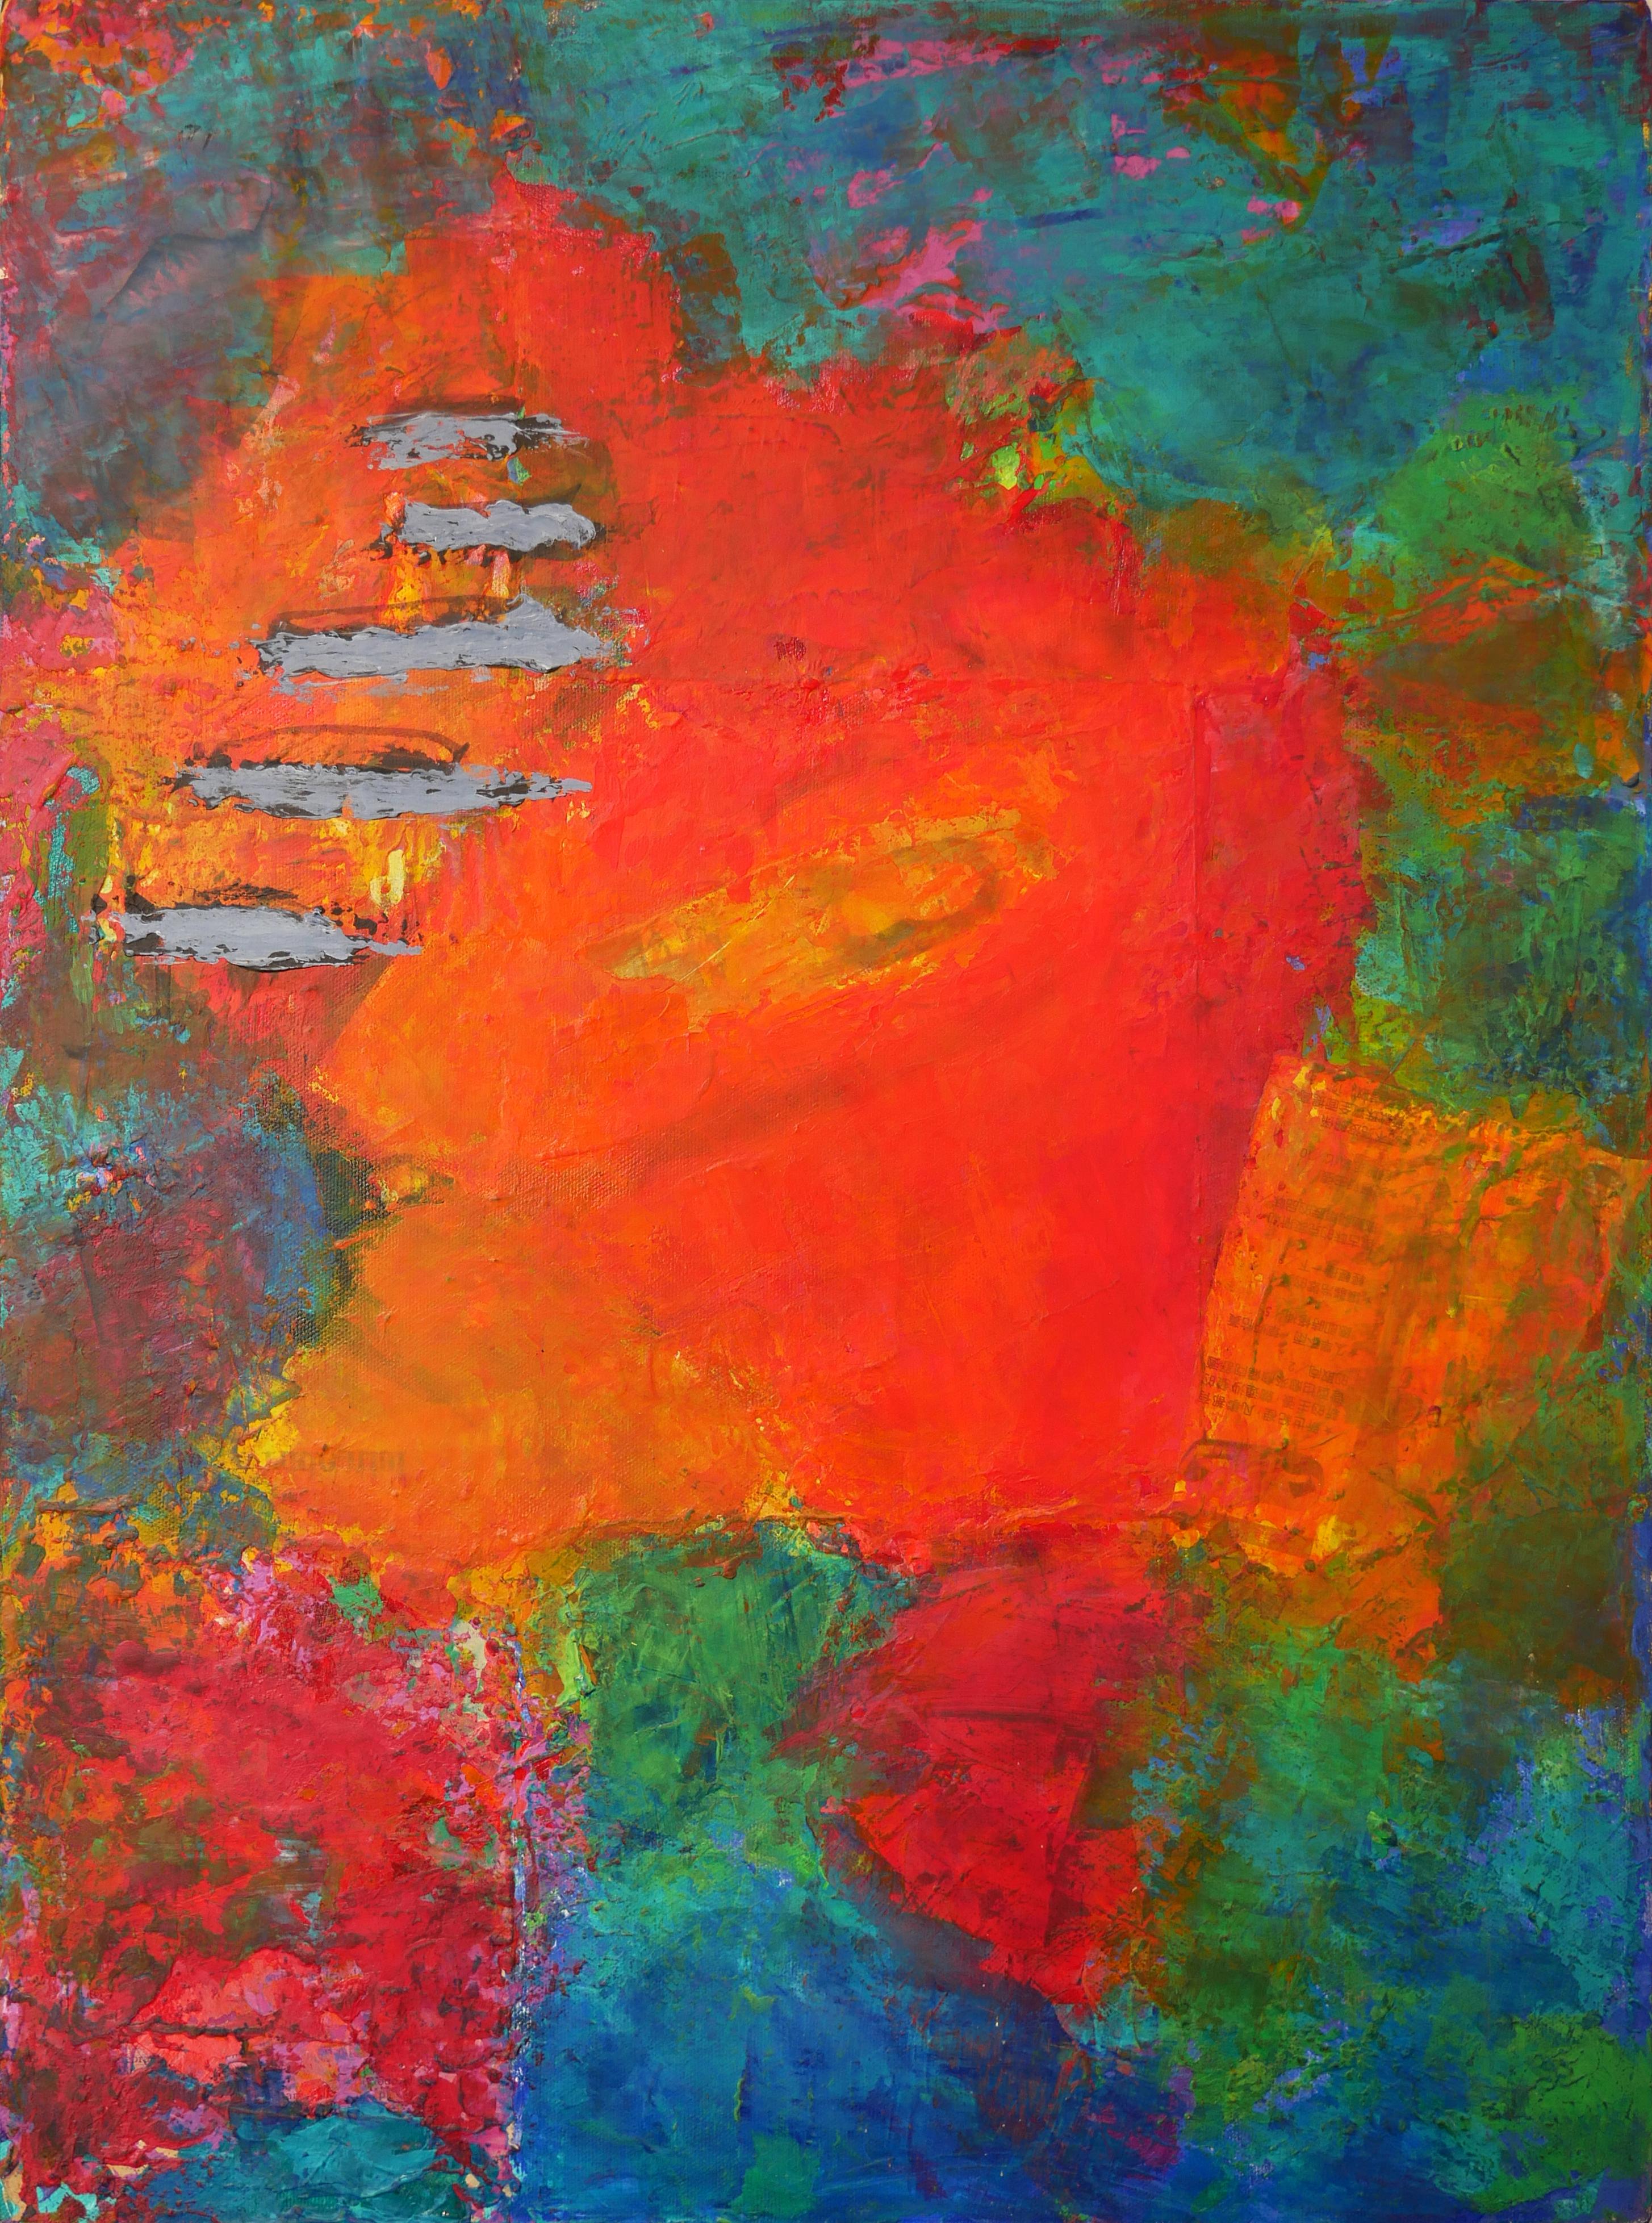 Peinture expressionniste abstraite rouge, bleue et verte Saturday Morning - Mixed Media Art de Phyllis Flax